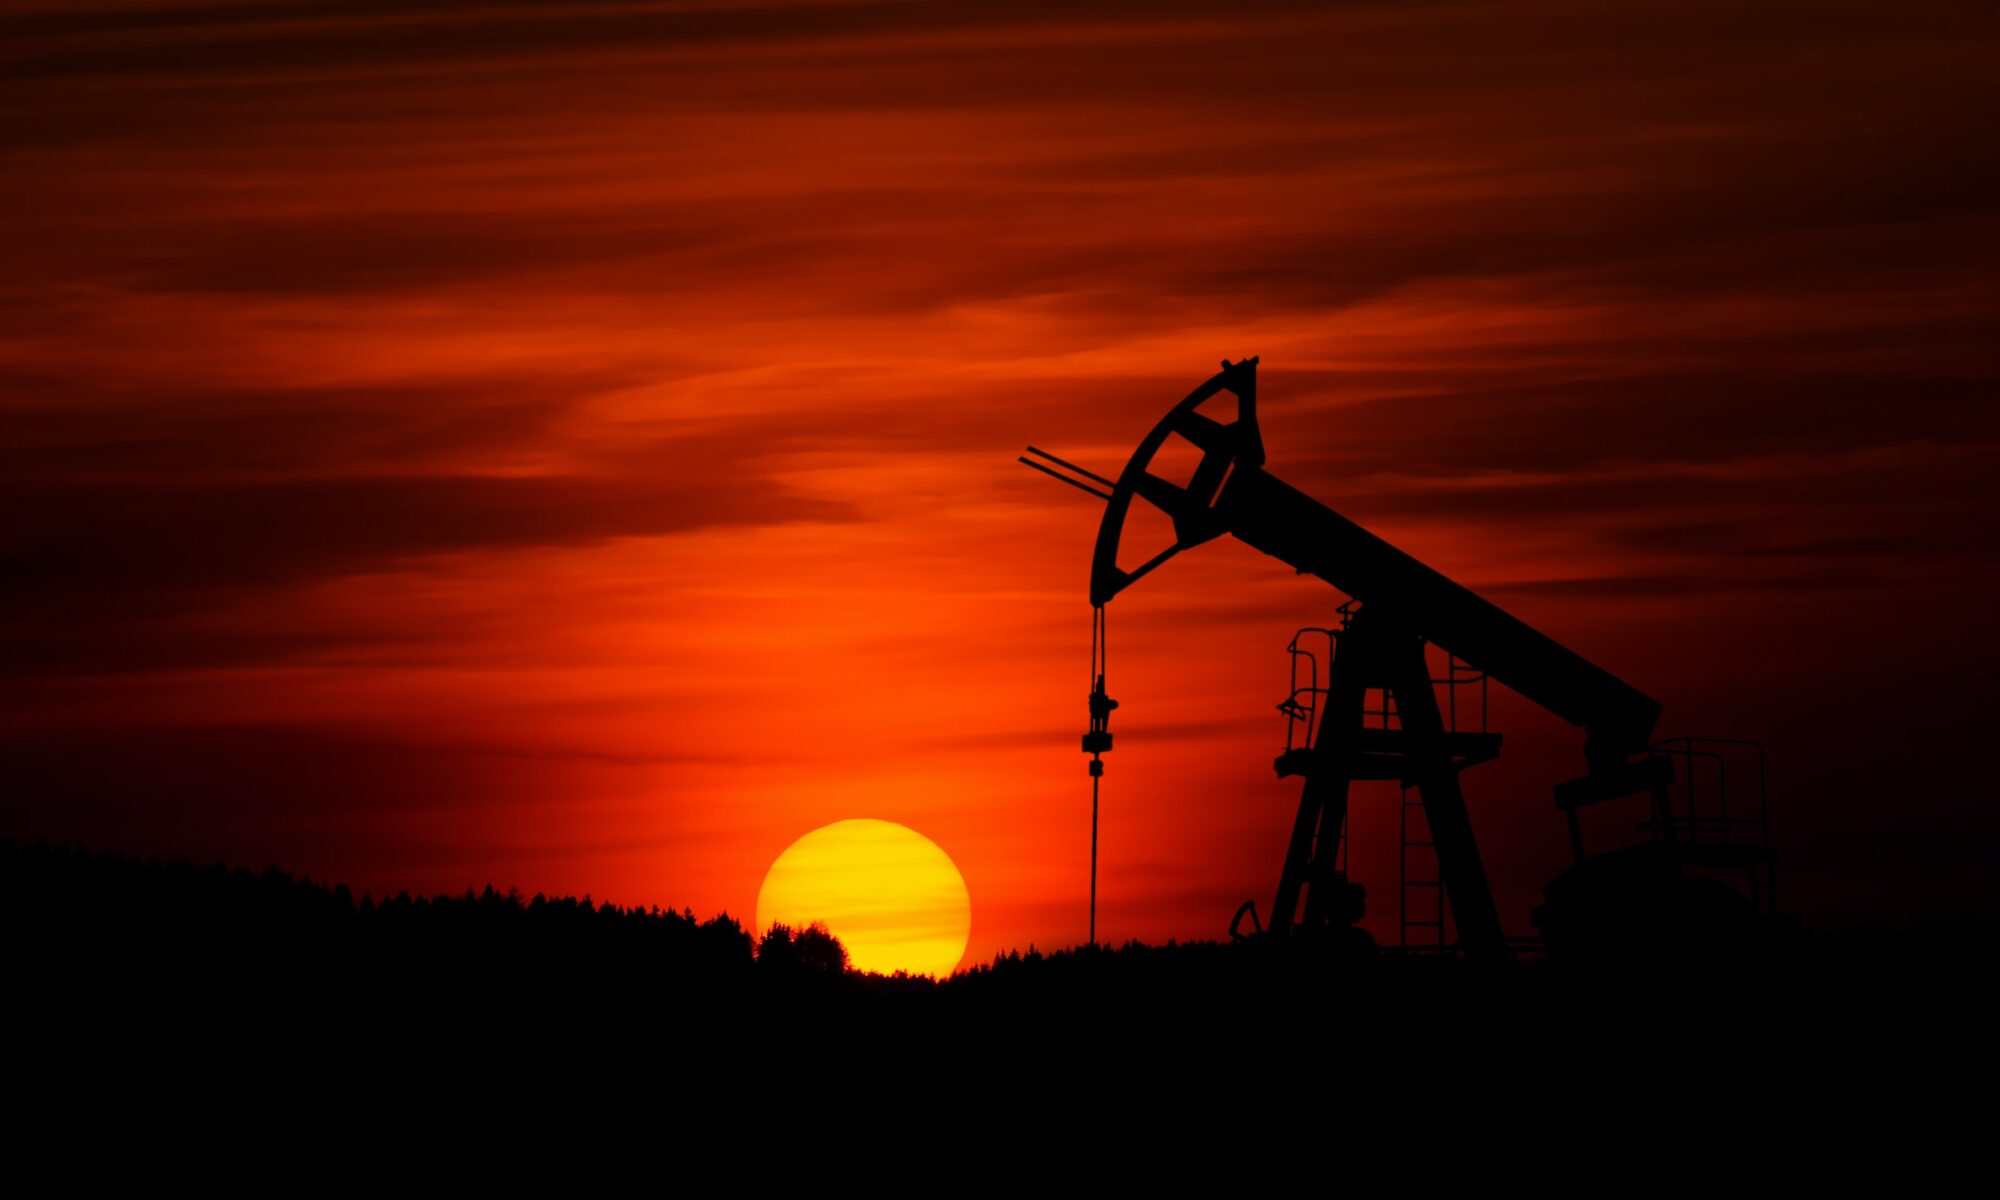 Image of an oil rig by Zbynek Burival via Unsplash.